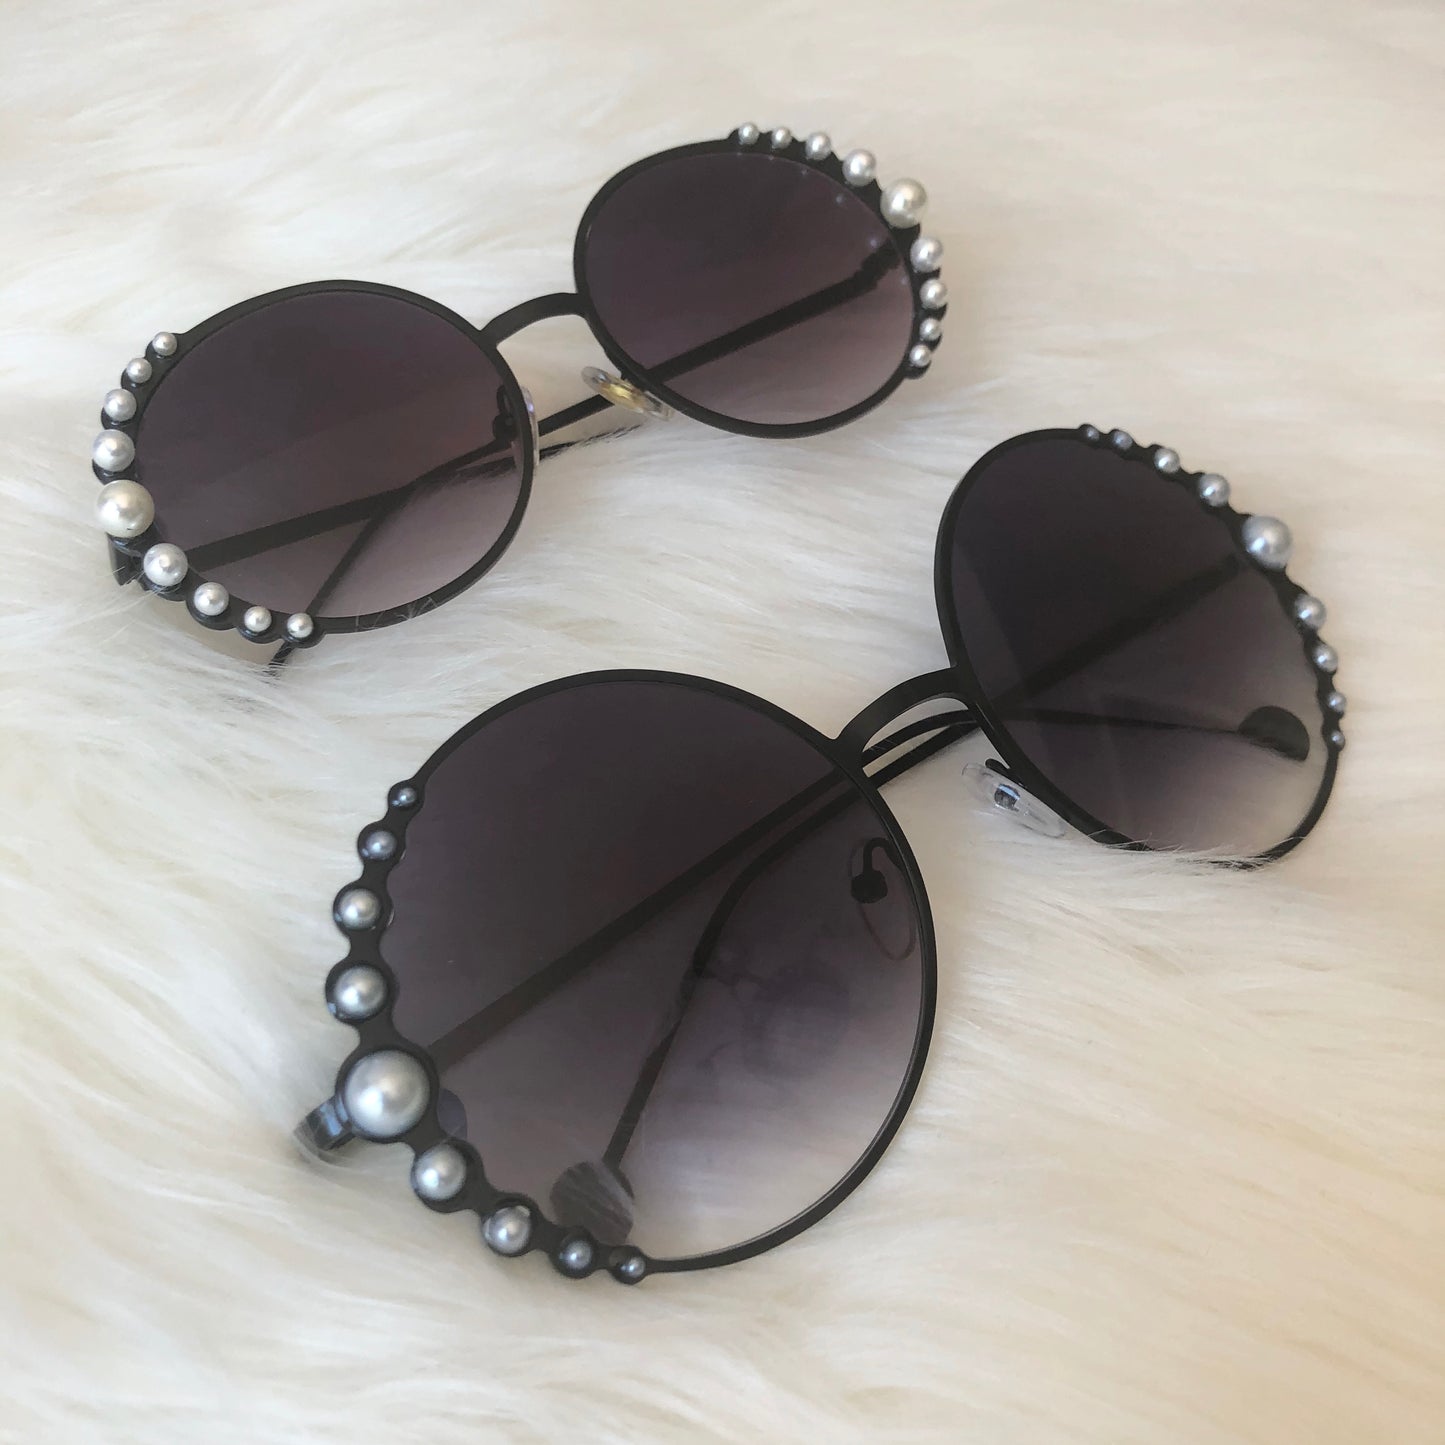 Ariel Pearl Women's Sunglasses